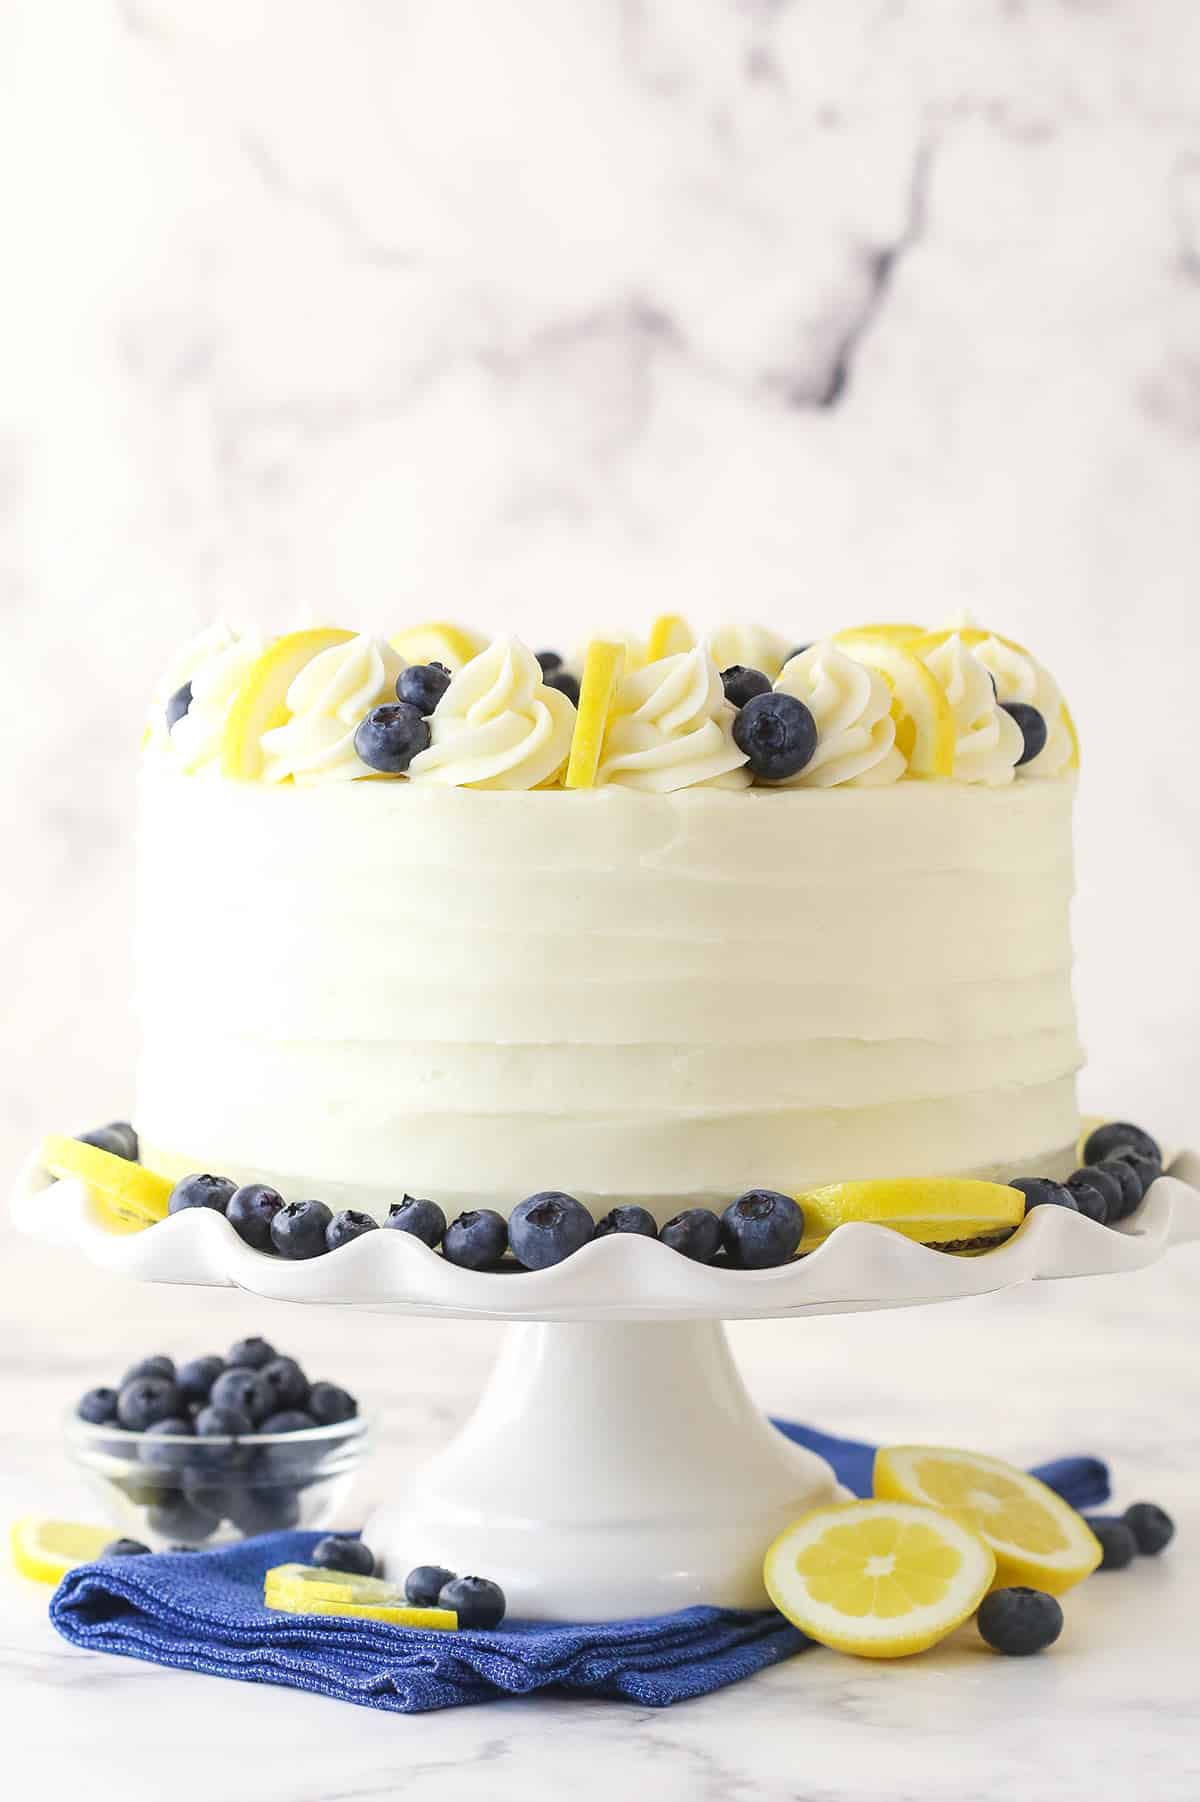 Lemon blueberry cake on a cake stand near fresh blueberries and lemon slices.